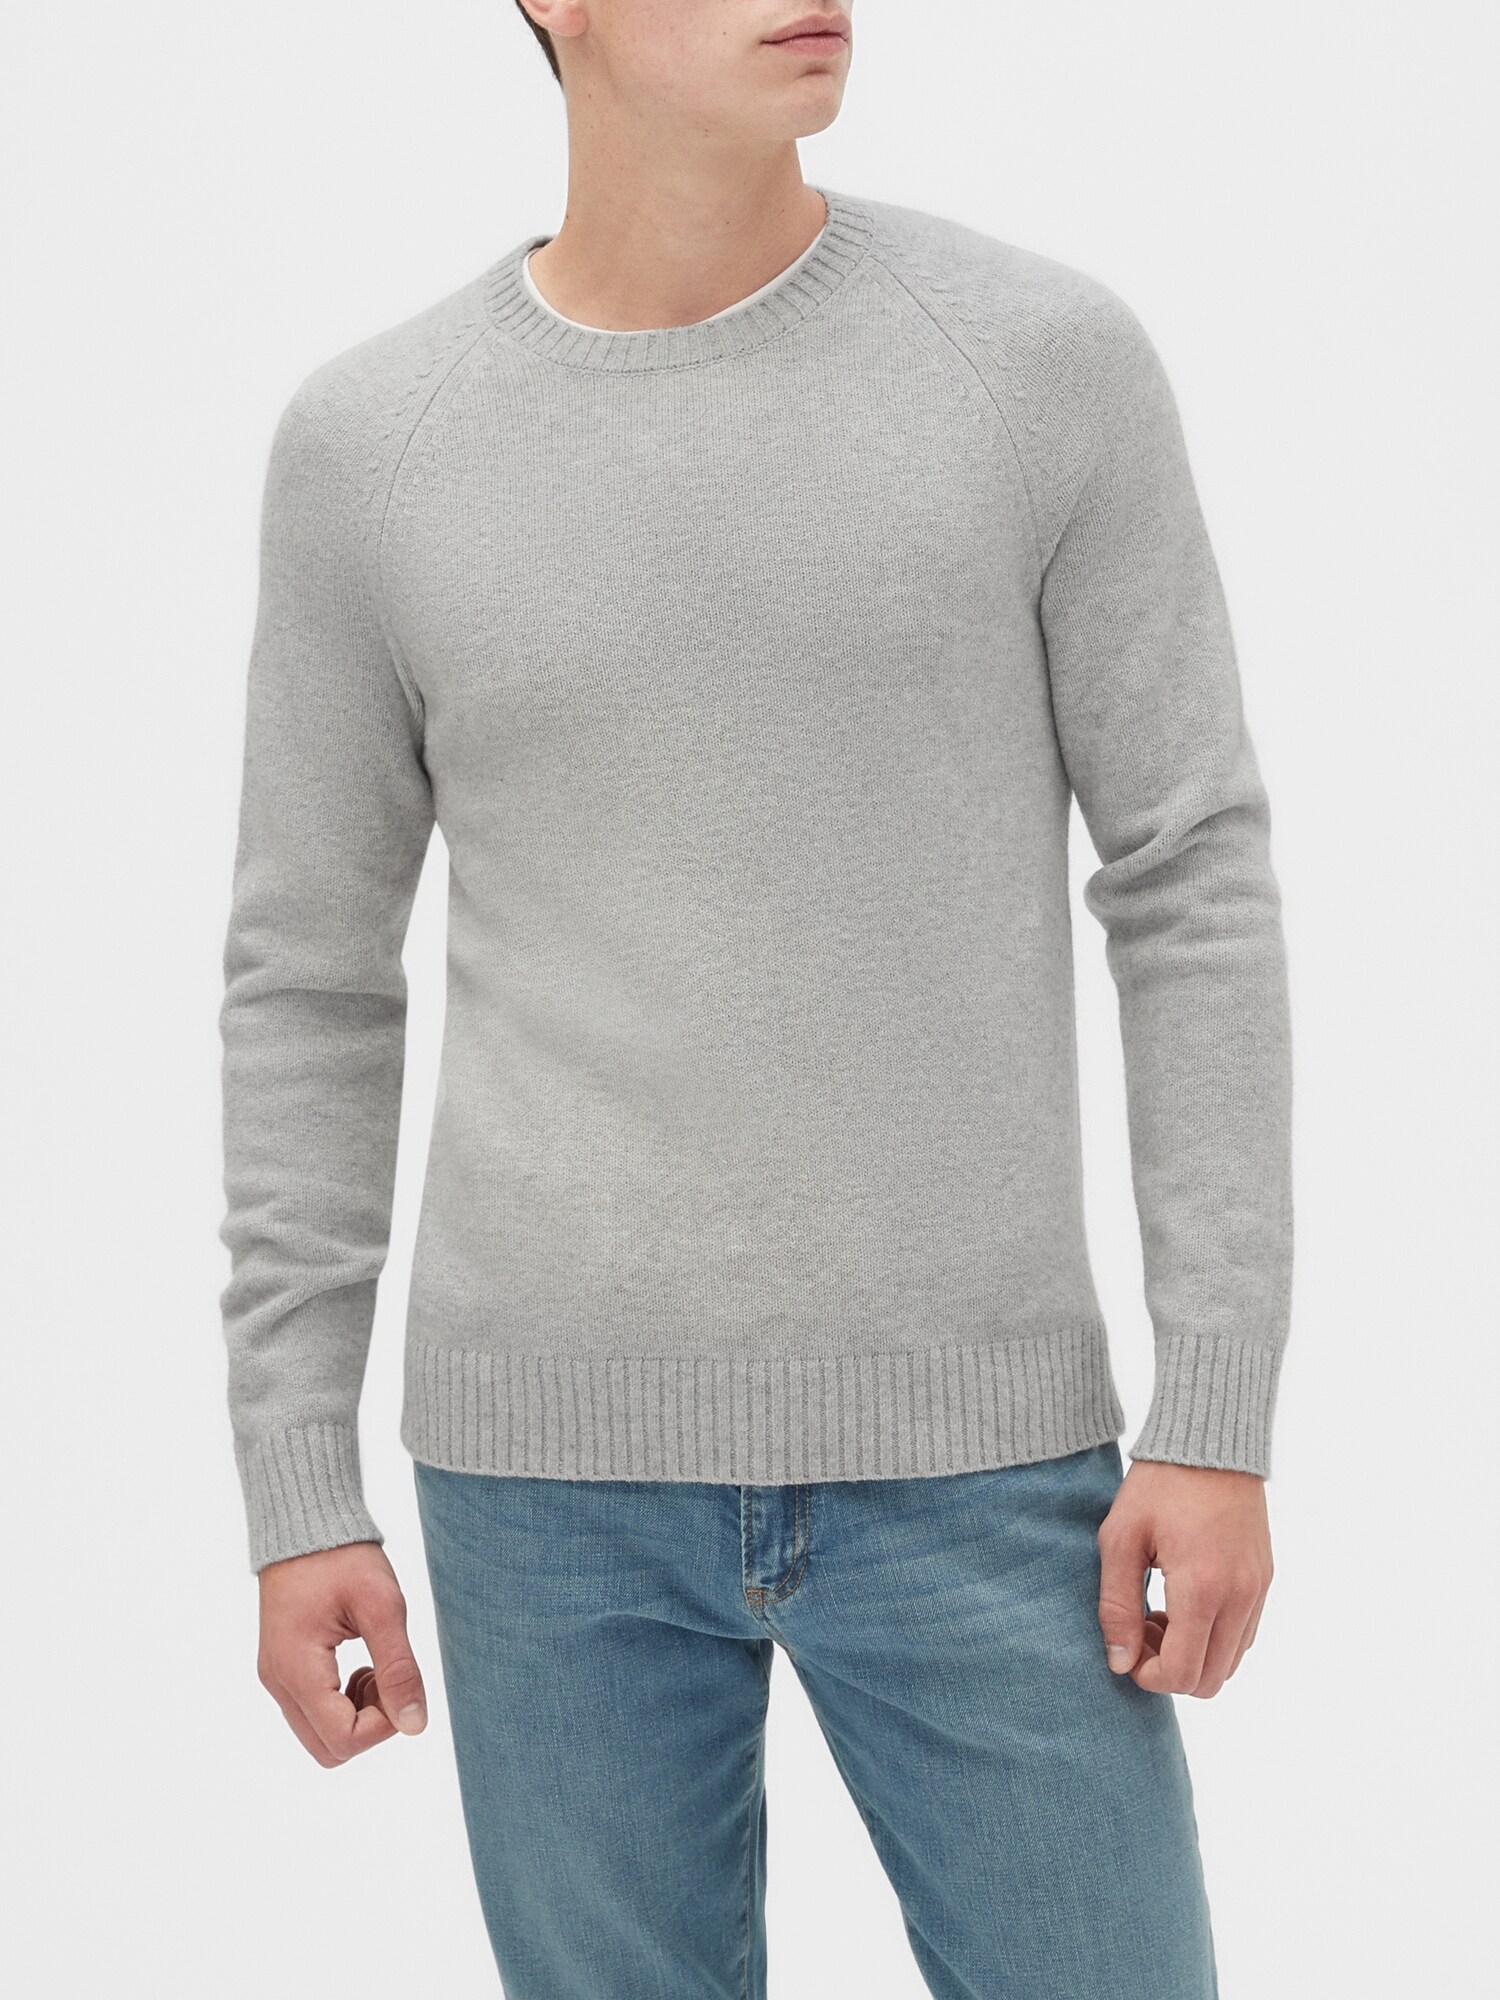 gap factory men's sweaters